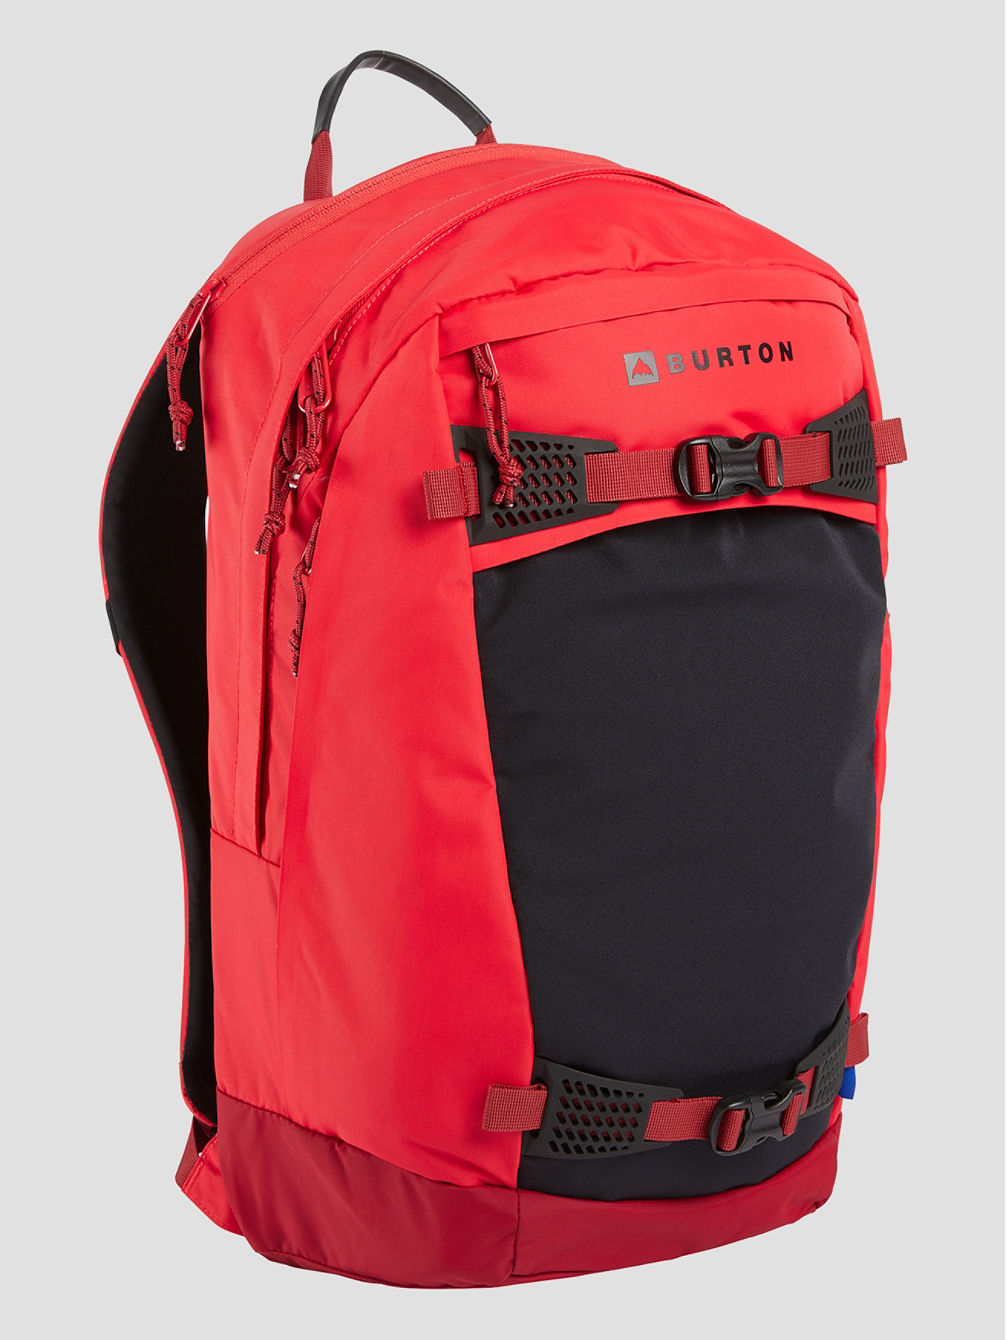 Day Hiker 28L Backpack